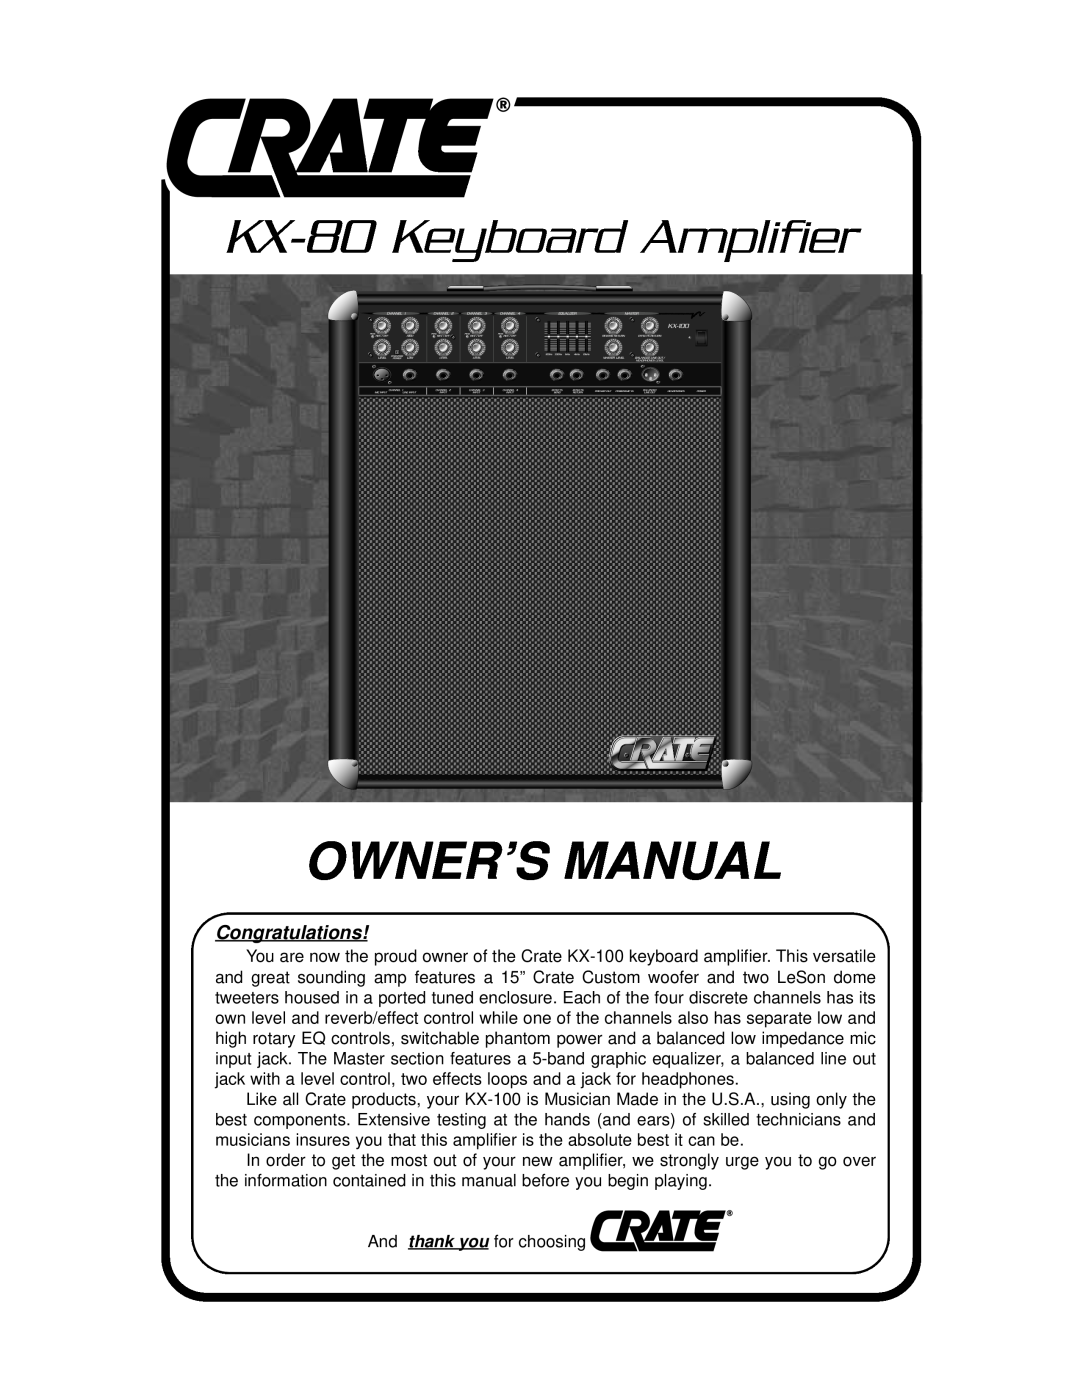 Crate Amplifiers owner manual KX-80Keyboard Amplifier, Congratulations 